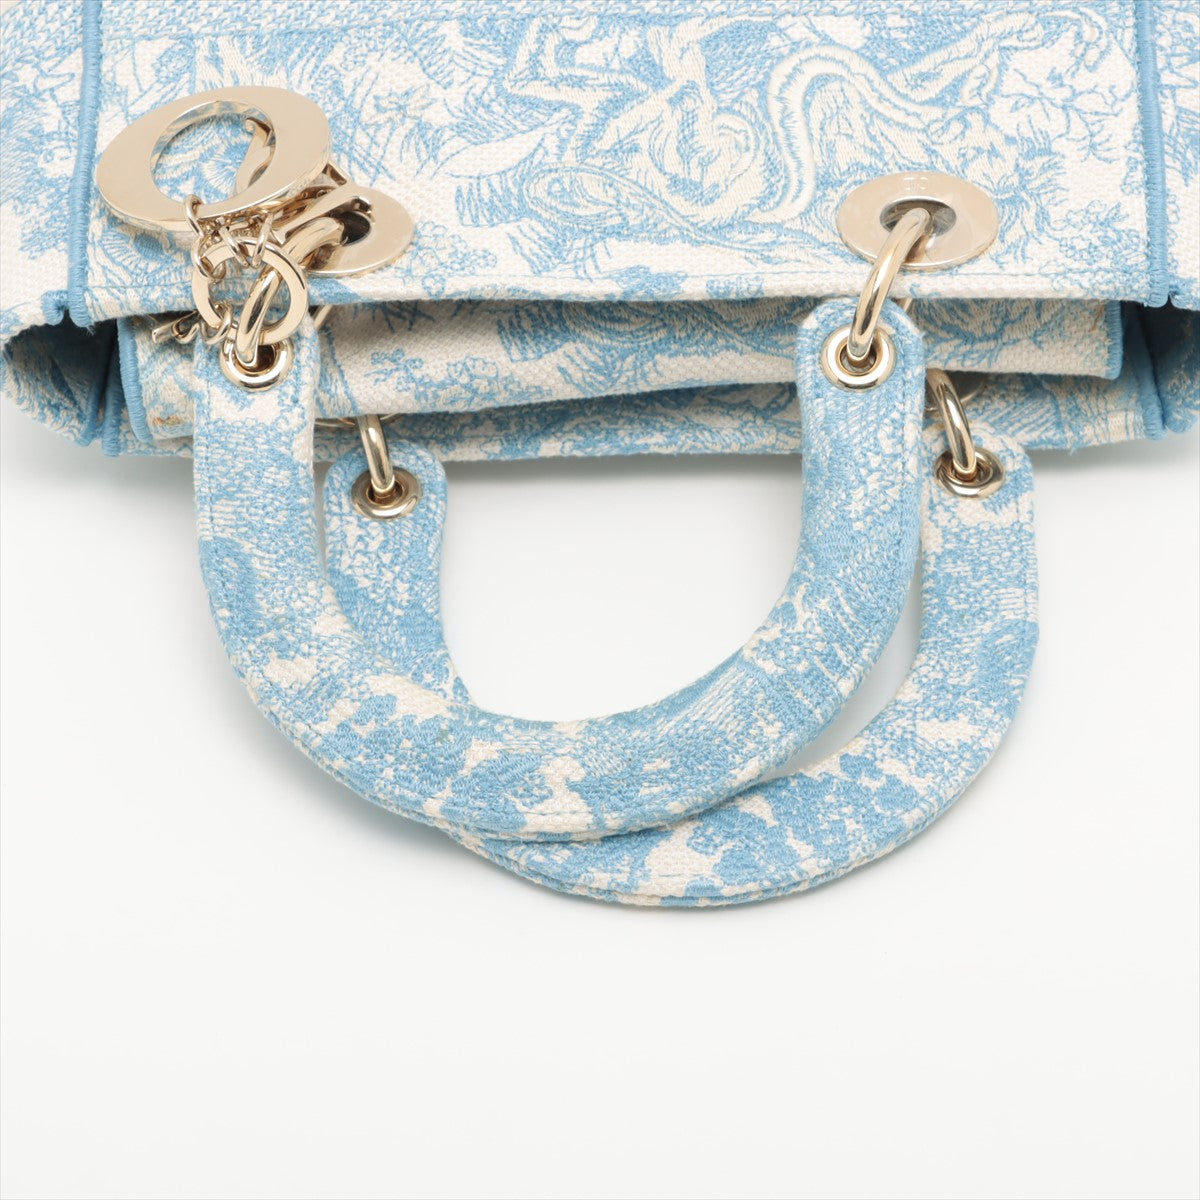 Christian Dior Lady Dior Toile Doo JUY Embroidery canvas 2way handbag Blue